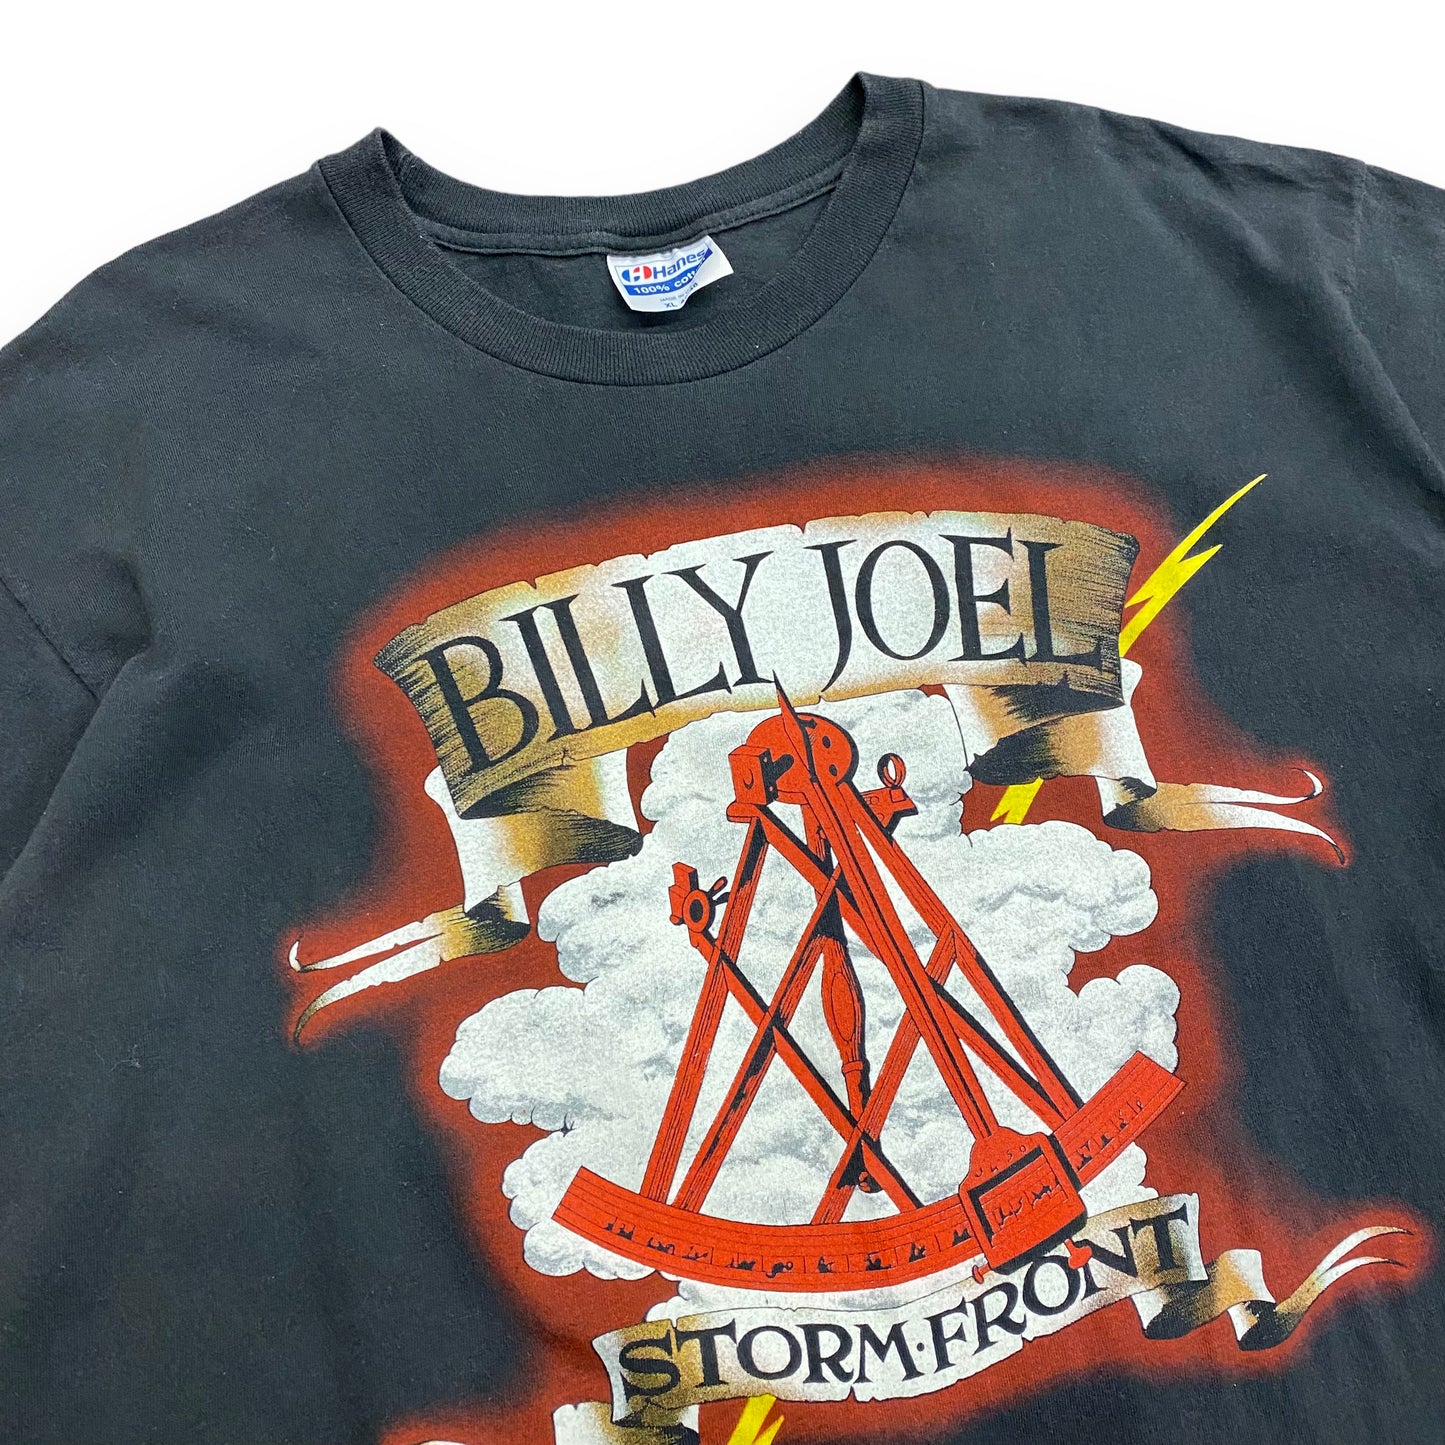 Vintage 1989 Billy Joel "Storm Front" Tour Black Band Tee - Size XL